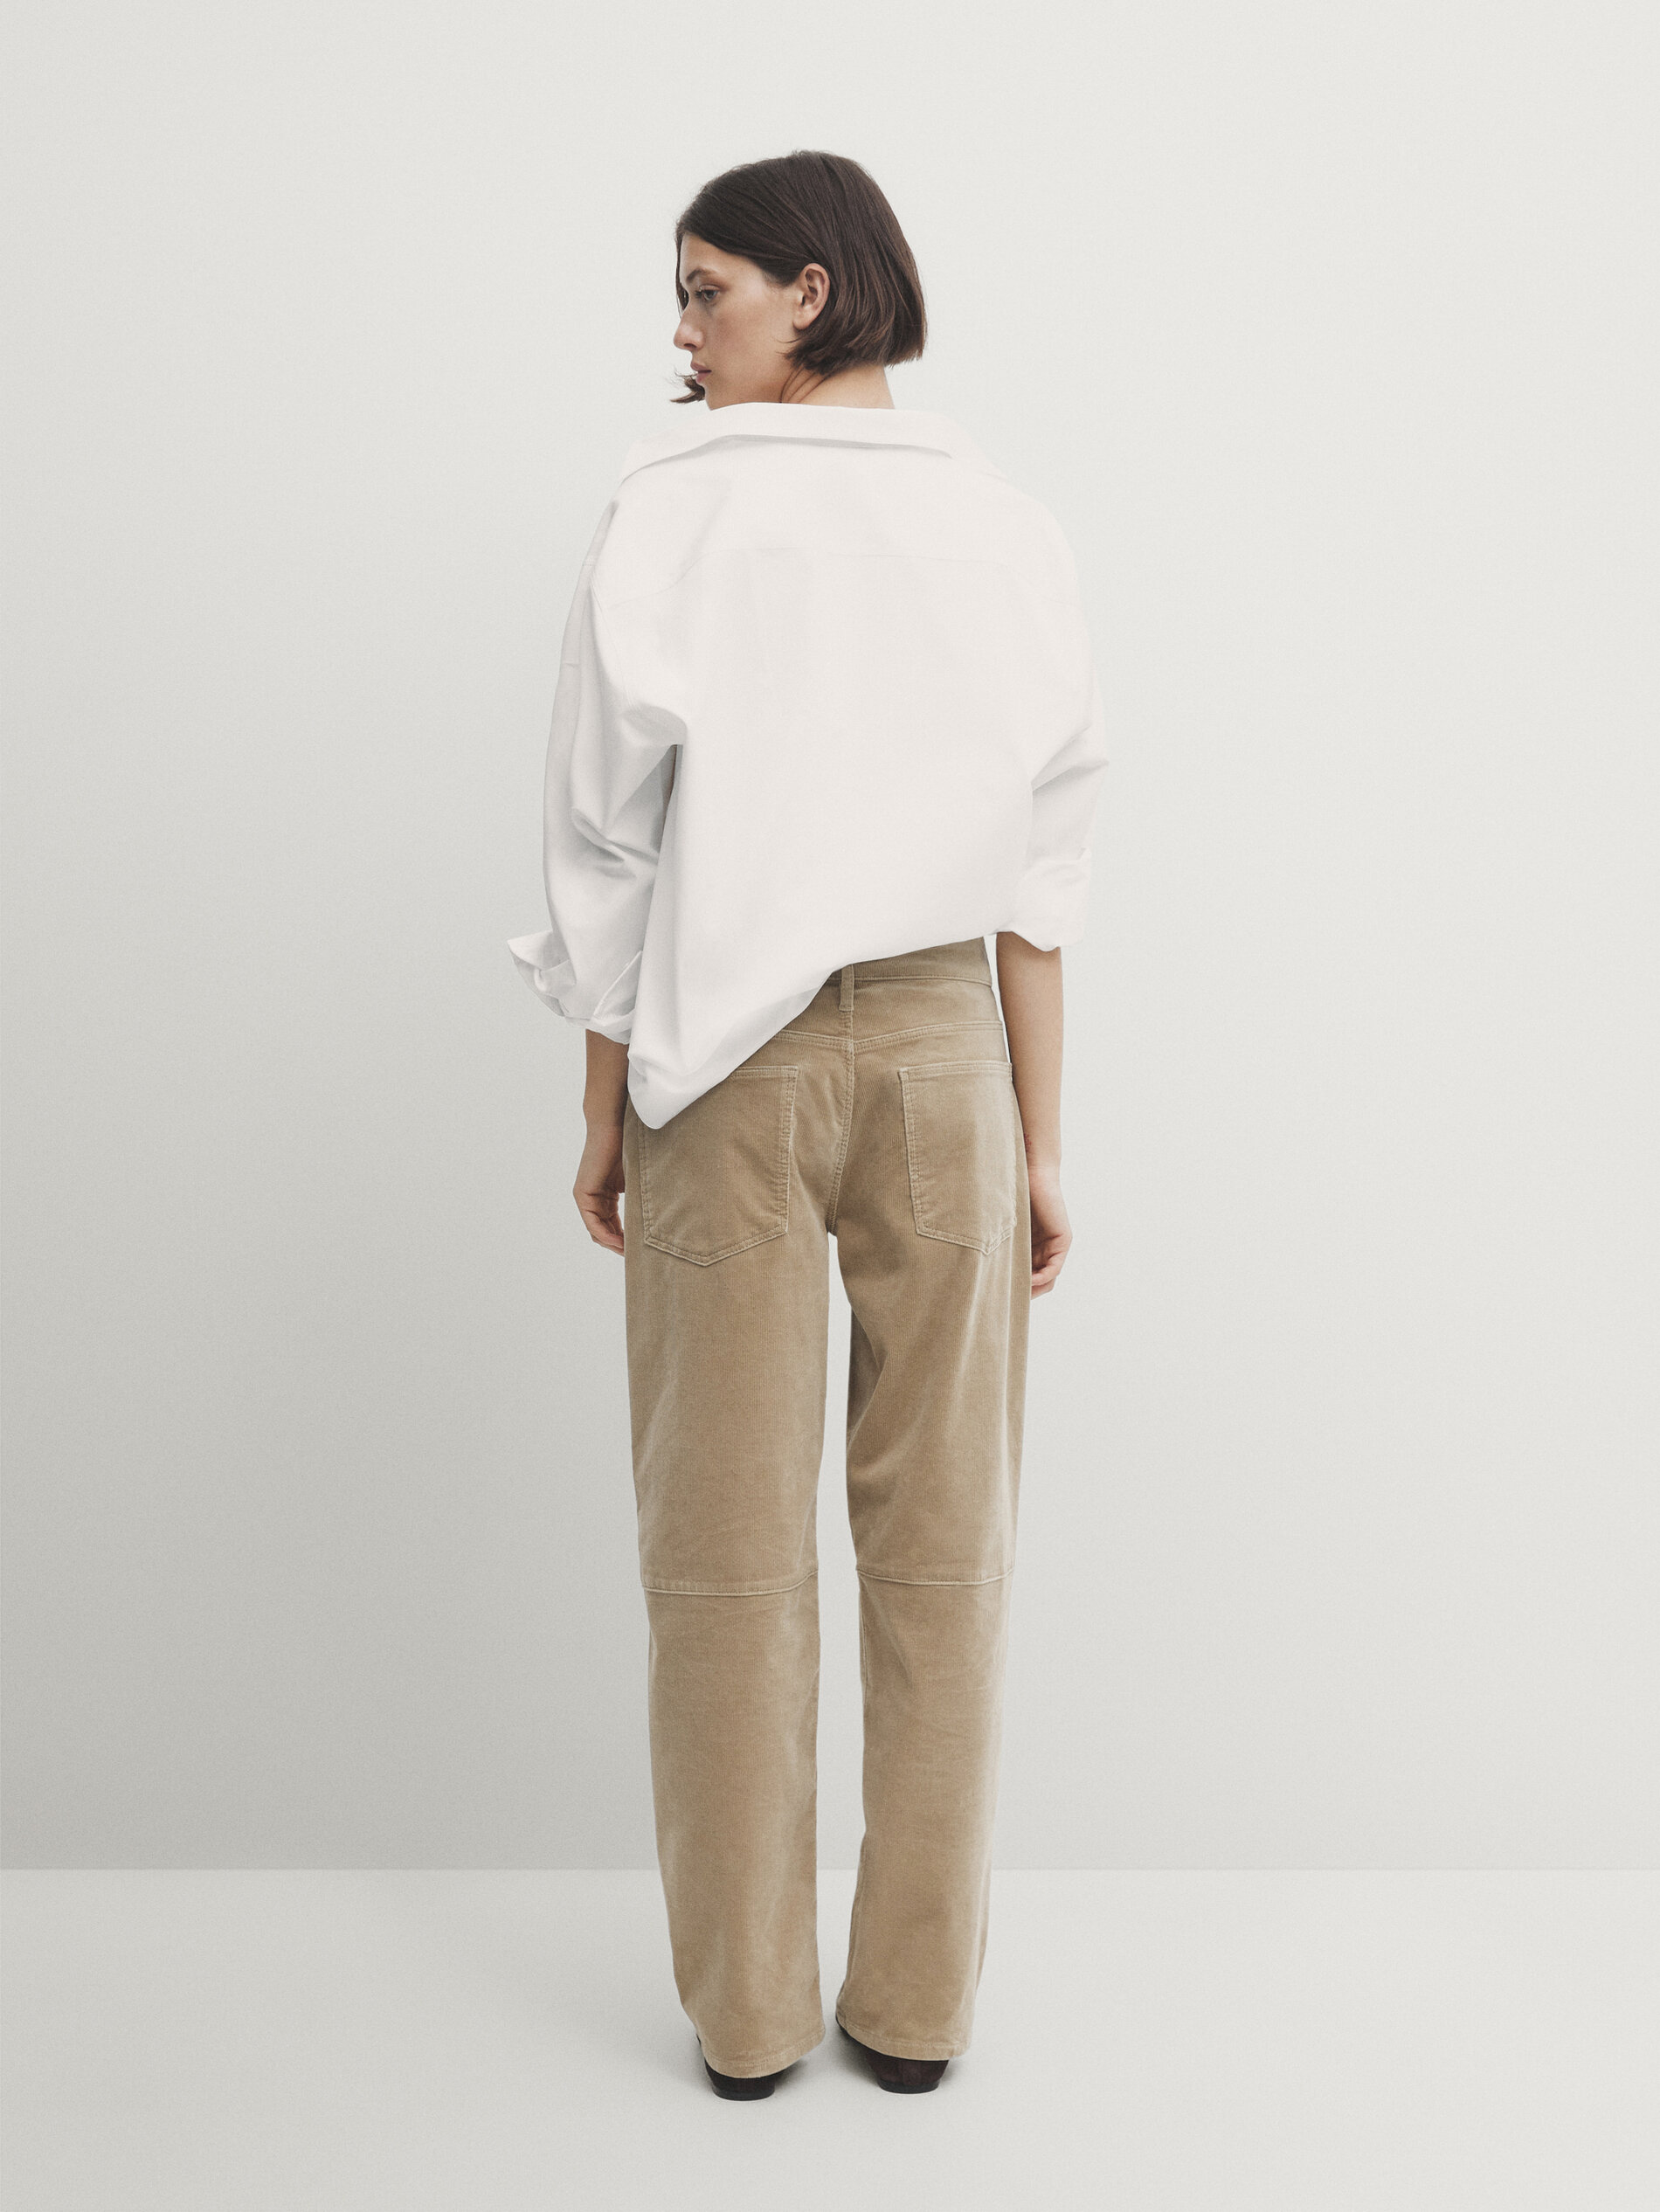 Massimo dutti cream linen blend cropped trousers Size 44 uk 16 | Cropped  trousers, Clothes design, Linen blend